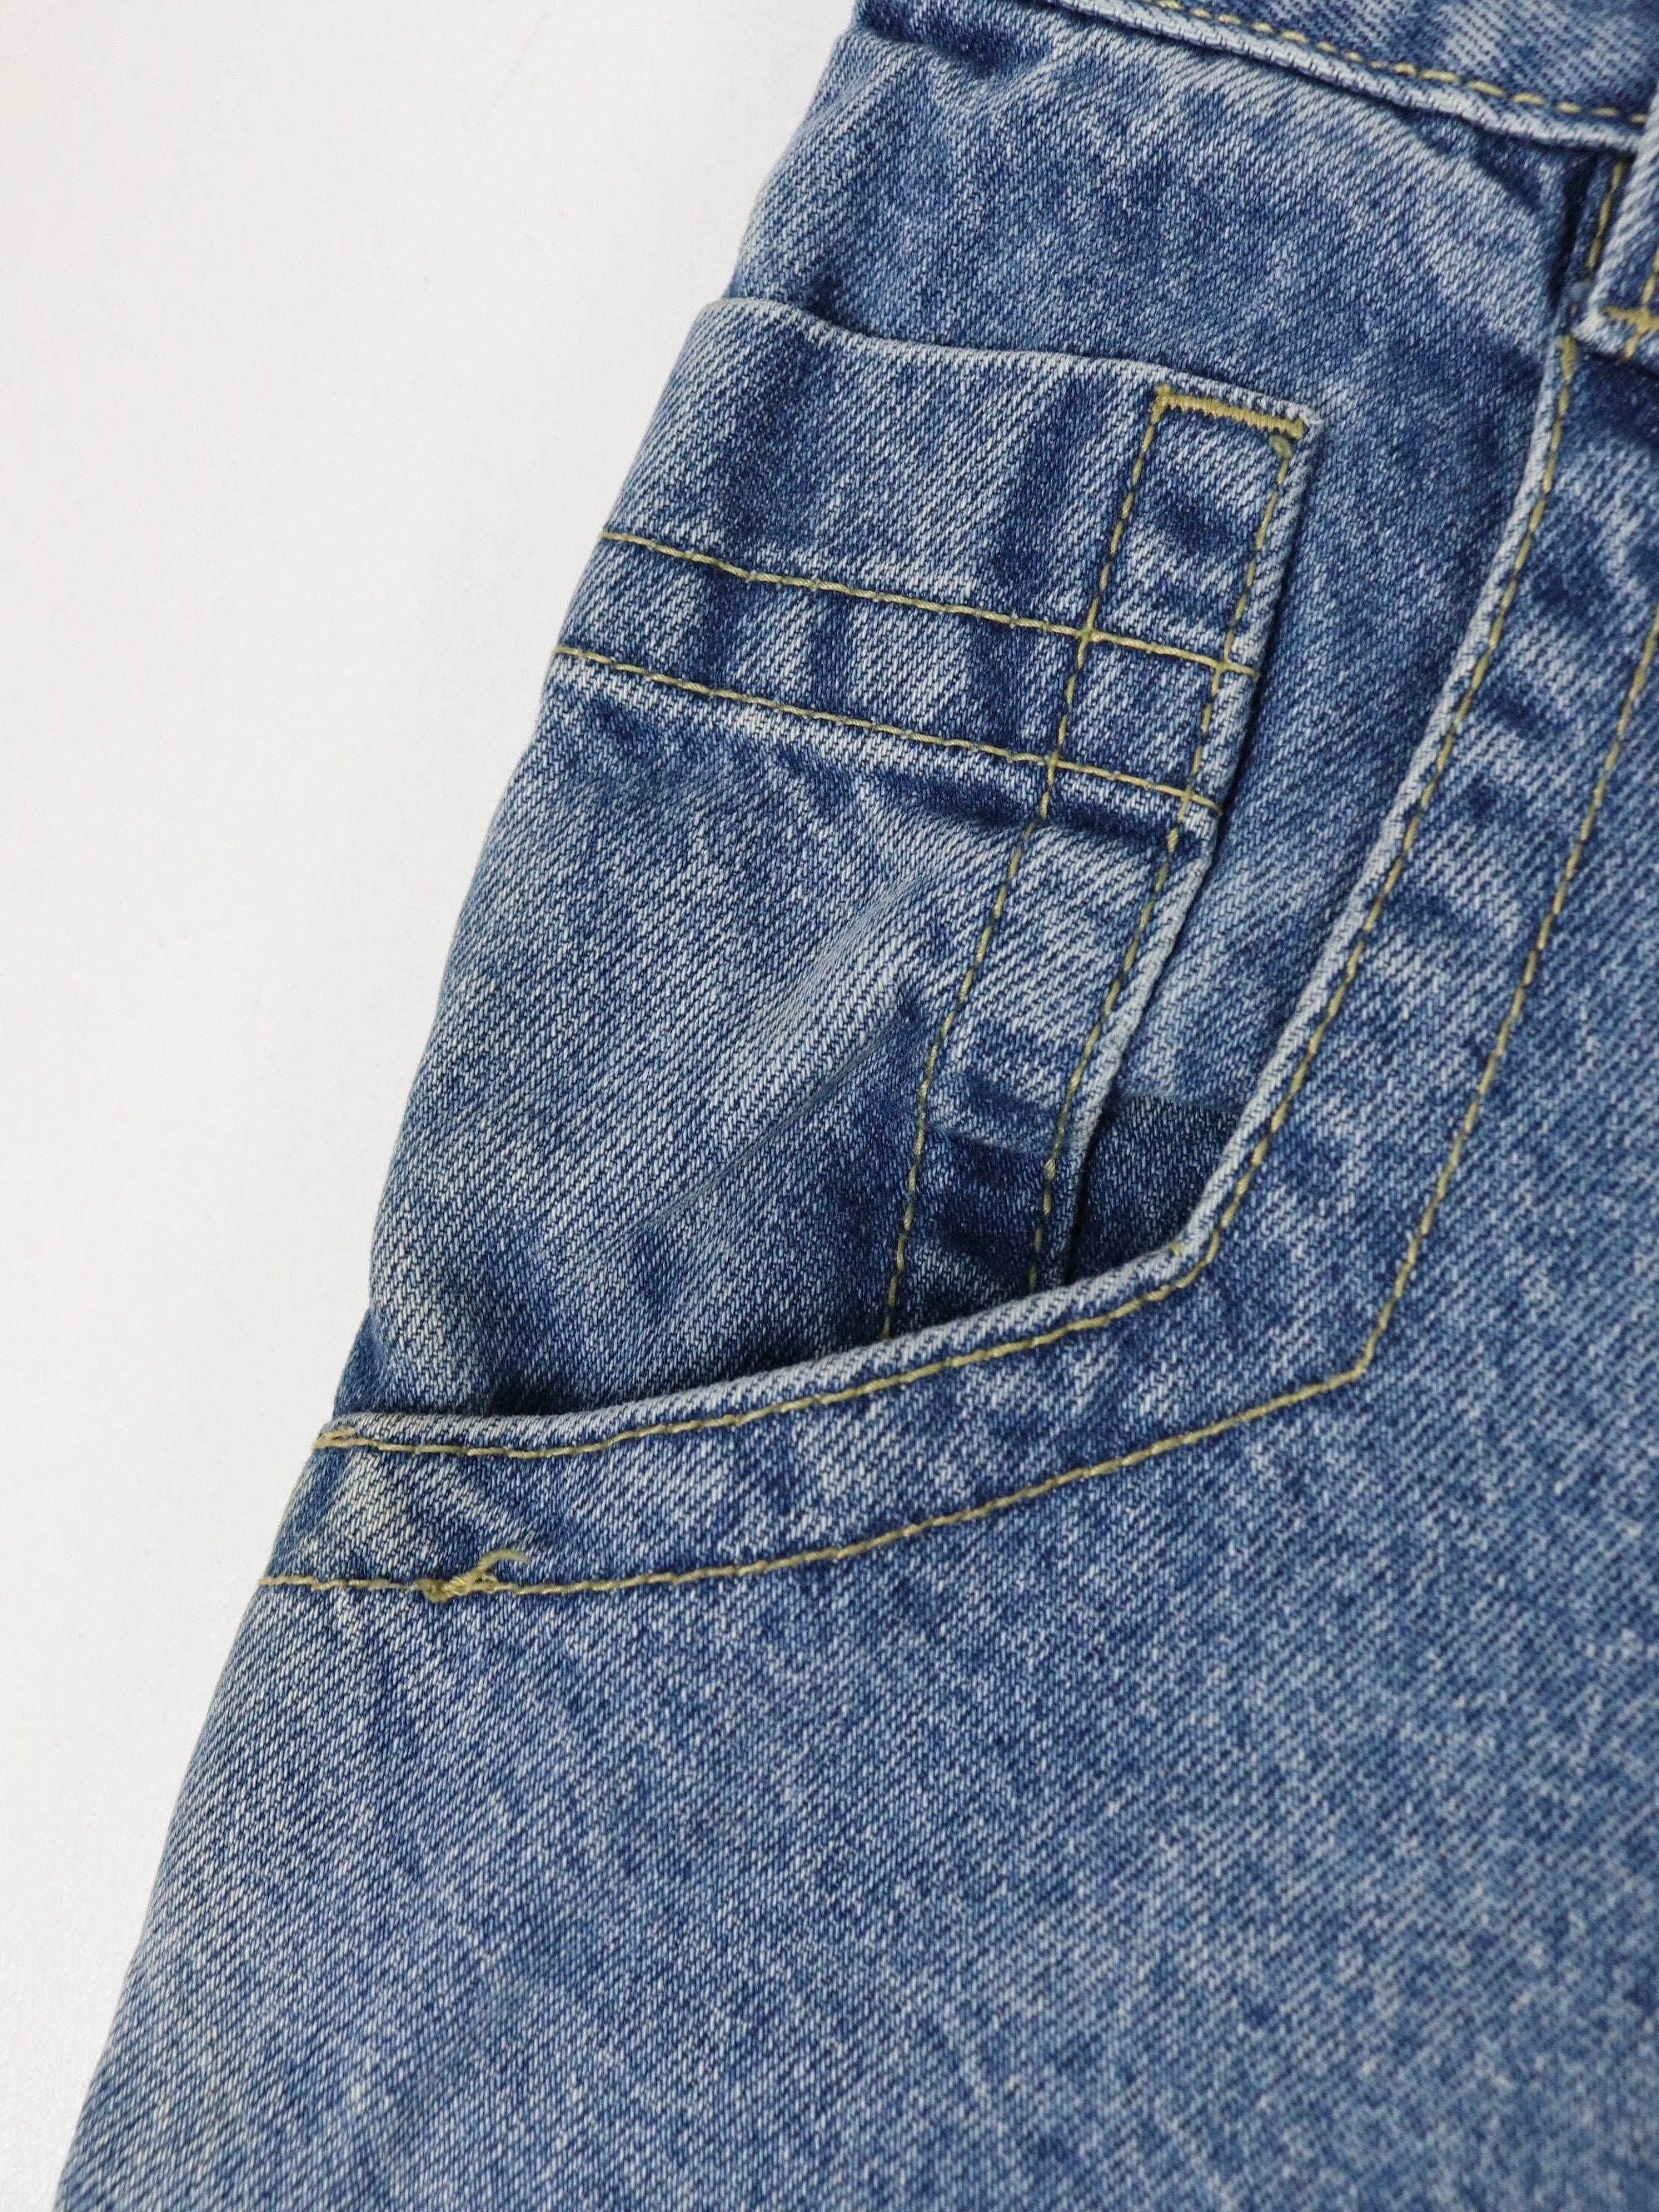 Vintage Urban Pants Youth 10 Blue Denim Jeans Y2K 24 x 21 – Proper